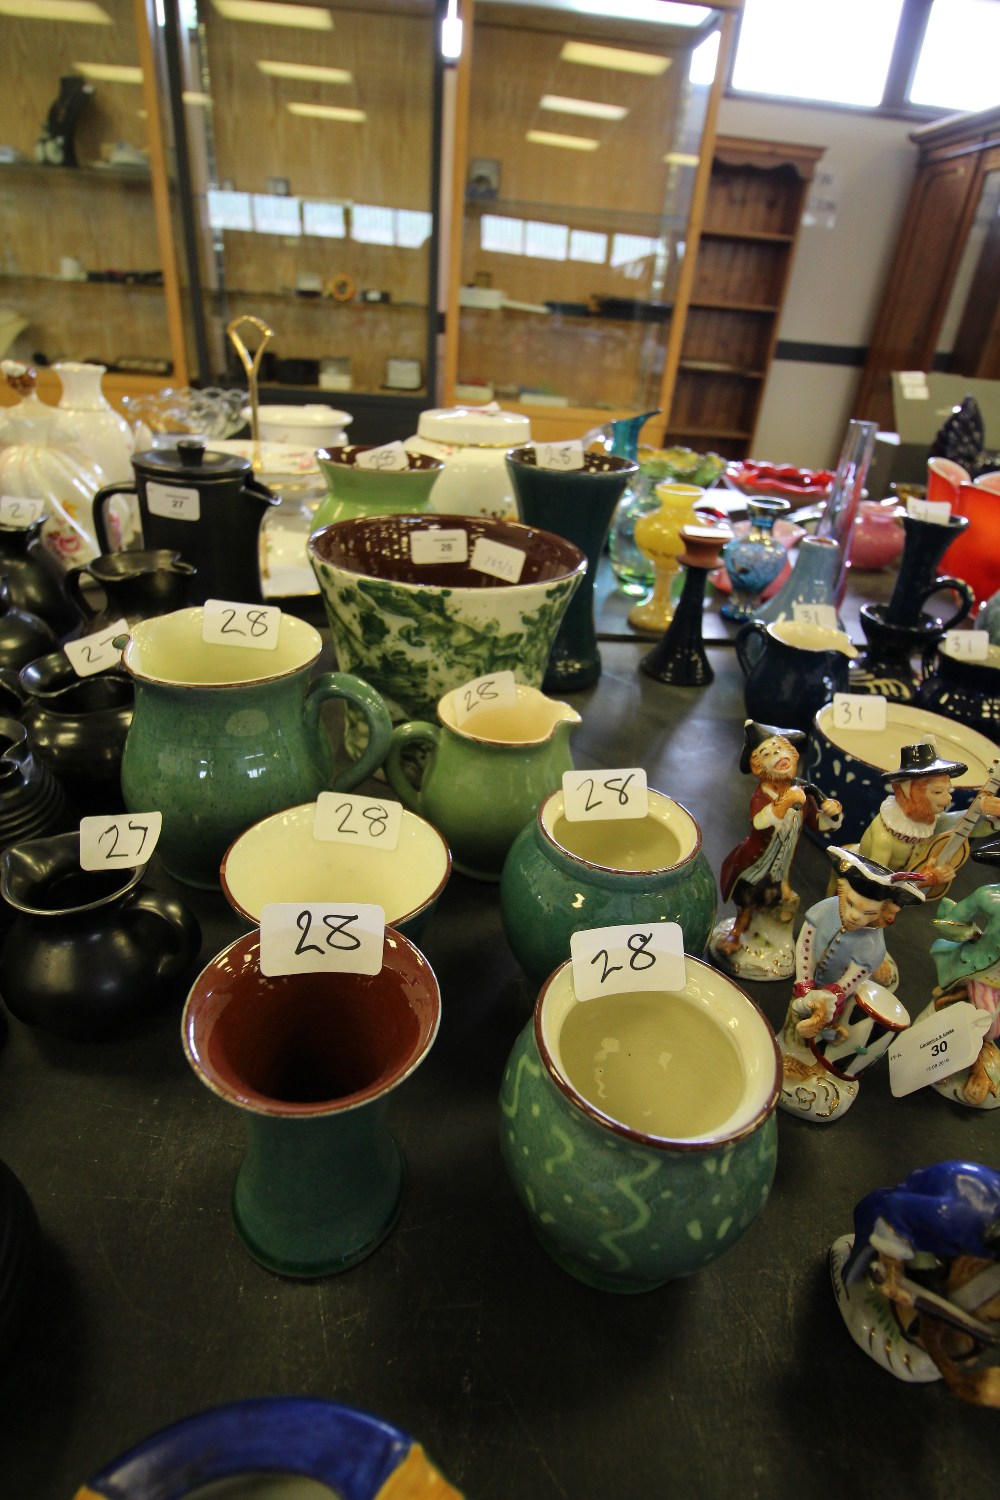 Quantity of Wetheriggs pottery wares - green slip etc